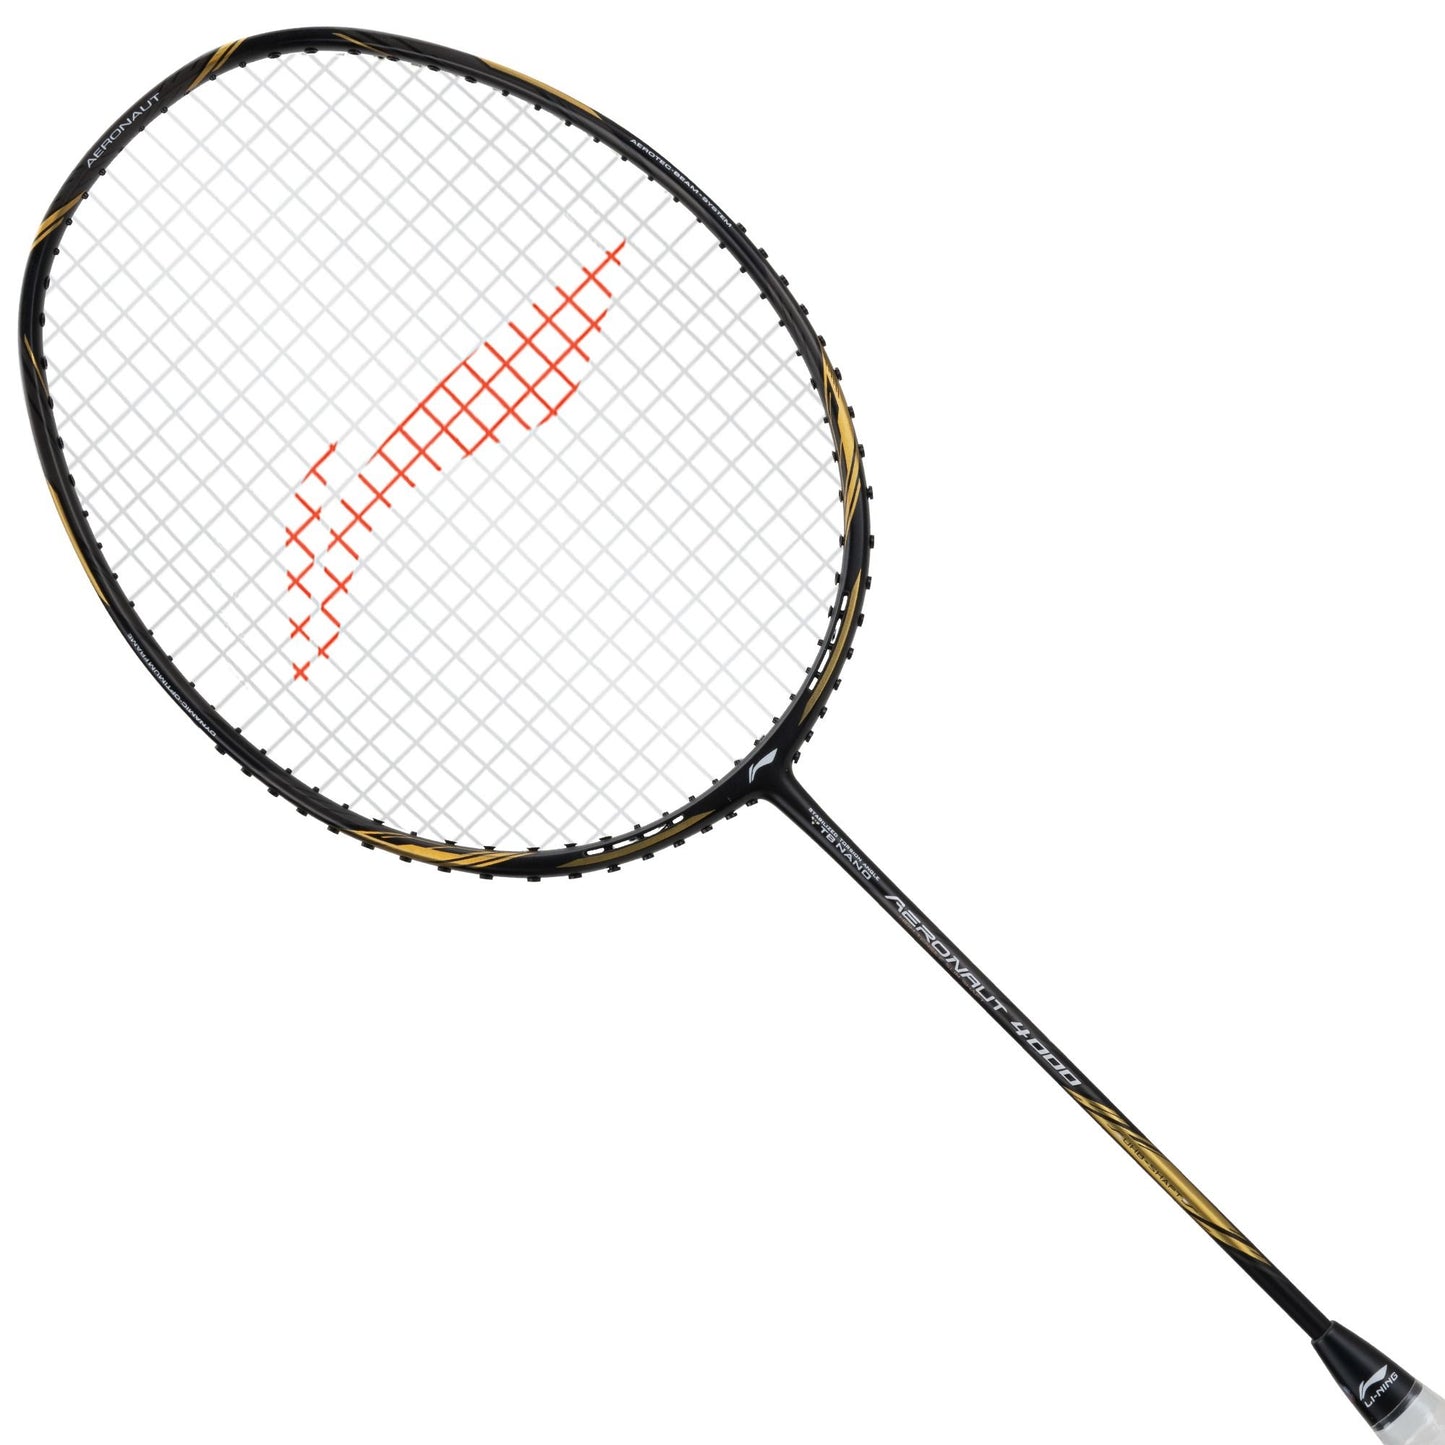 Li-Ning Aeronaut 4000 (Black/Gold) Badminton Racket